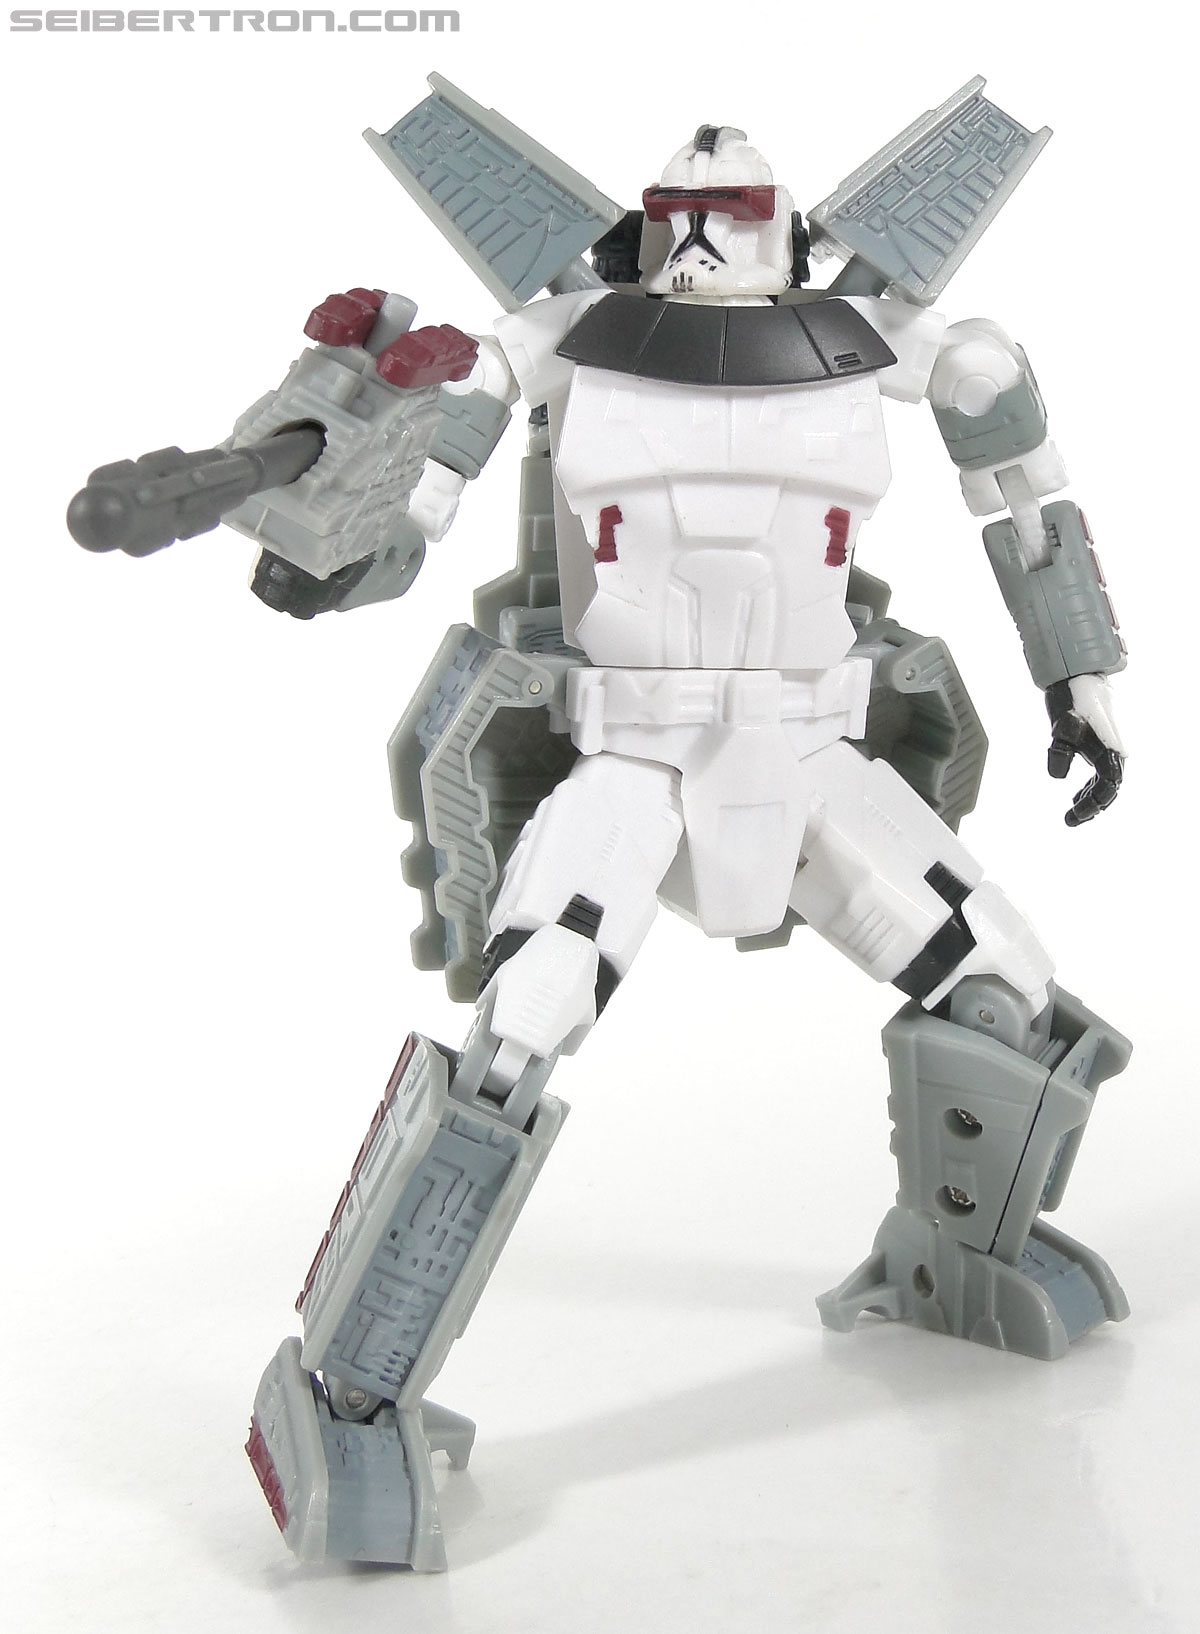 Star Wars Transformers Lieutenant Thire (Republic Attack Cruiser) (Image #67 of 76)